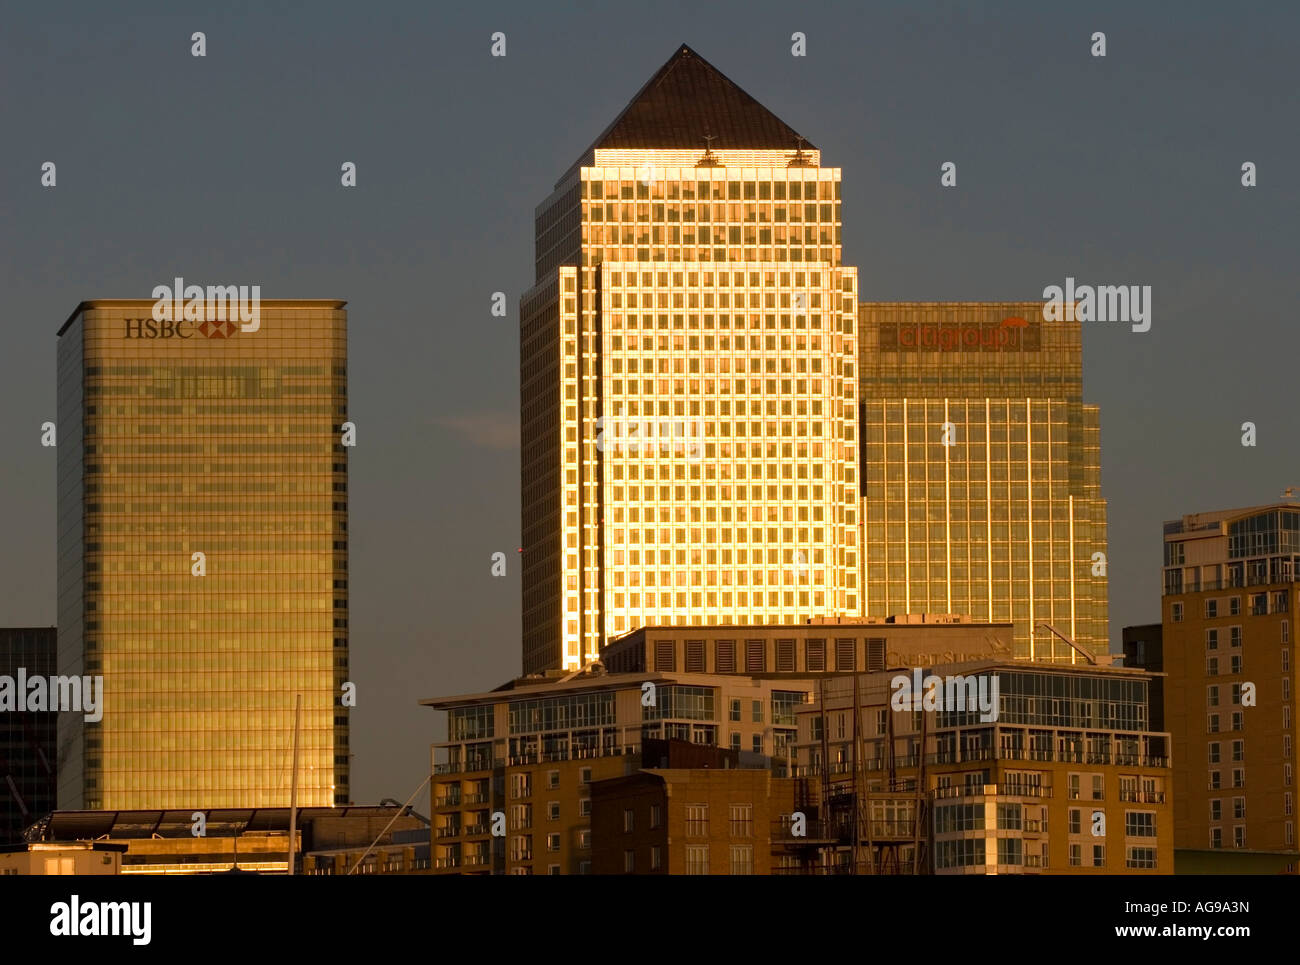 Canary Wharf - Docklands Londres - gratte-ciel Banque D'Images